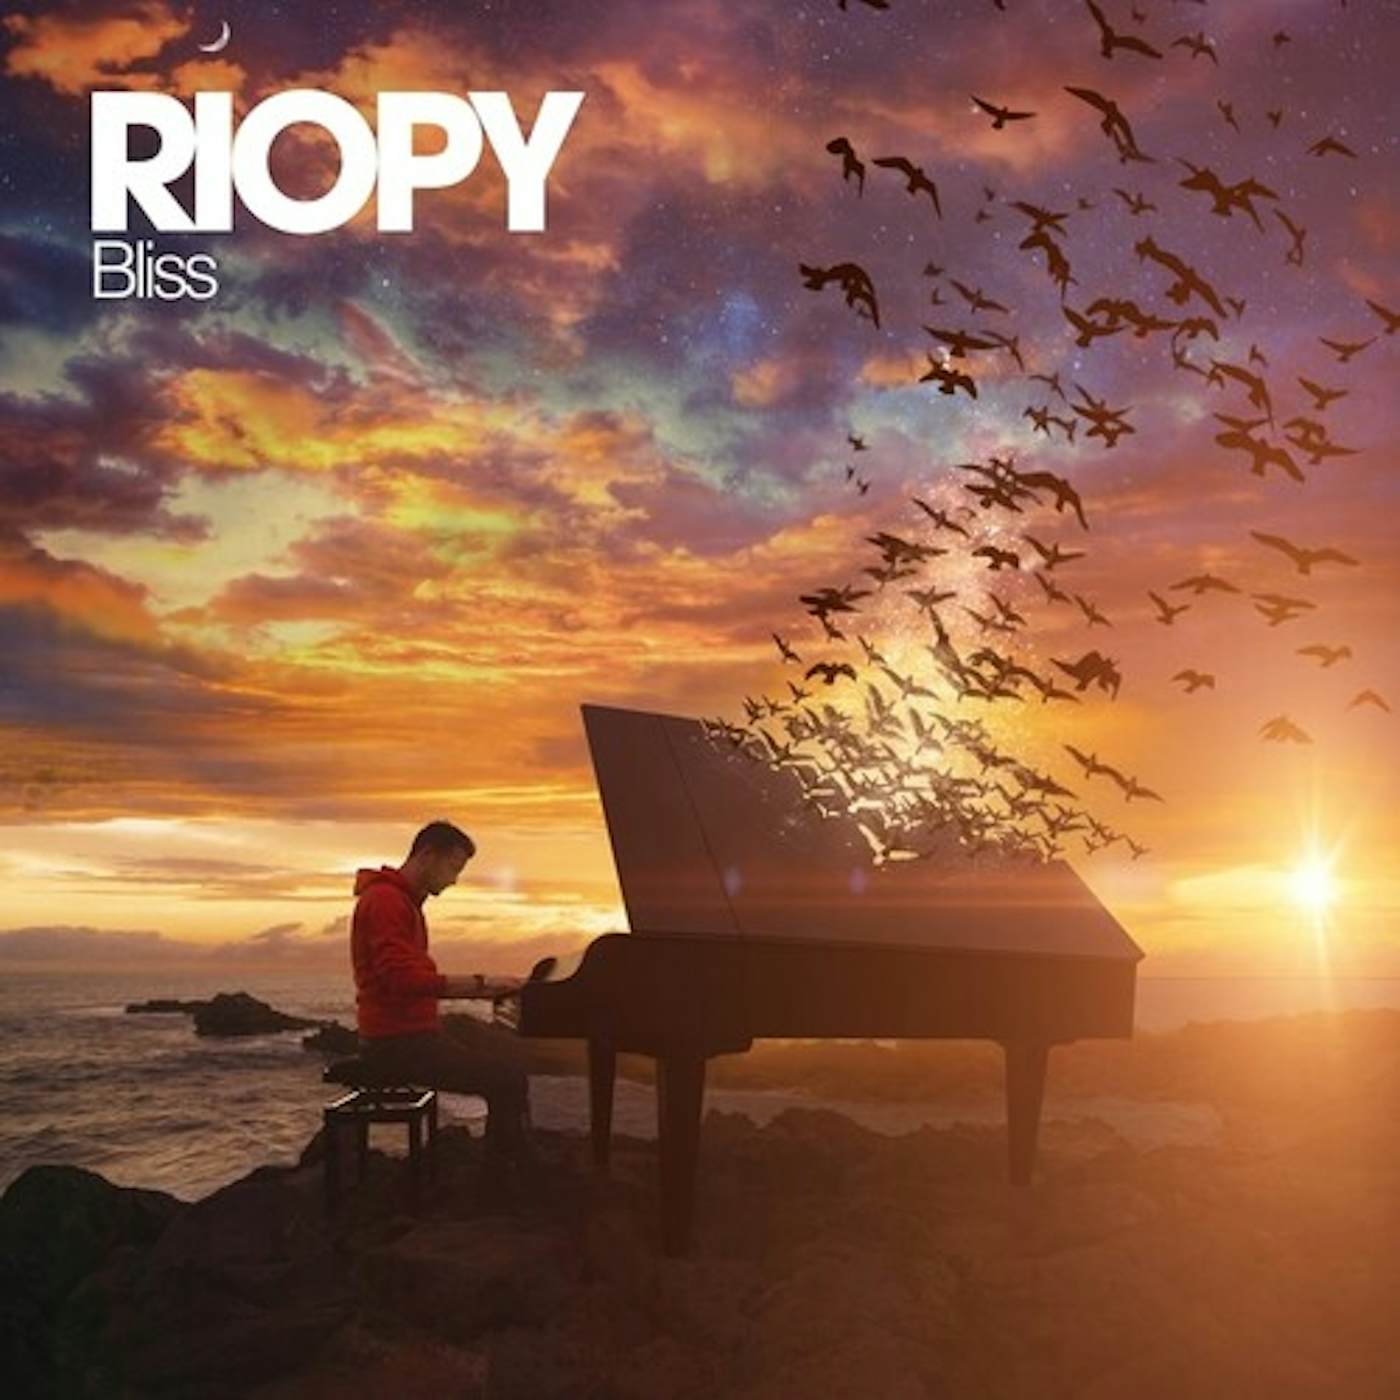 RIOPY BLISS CD